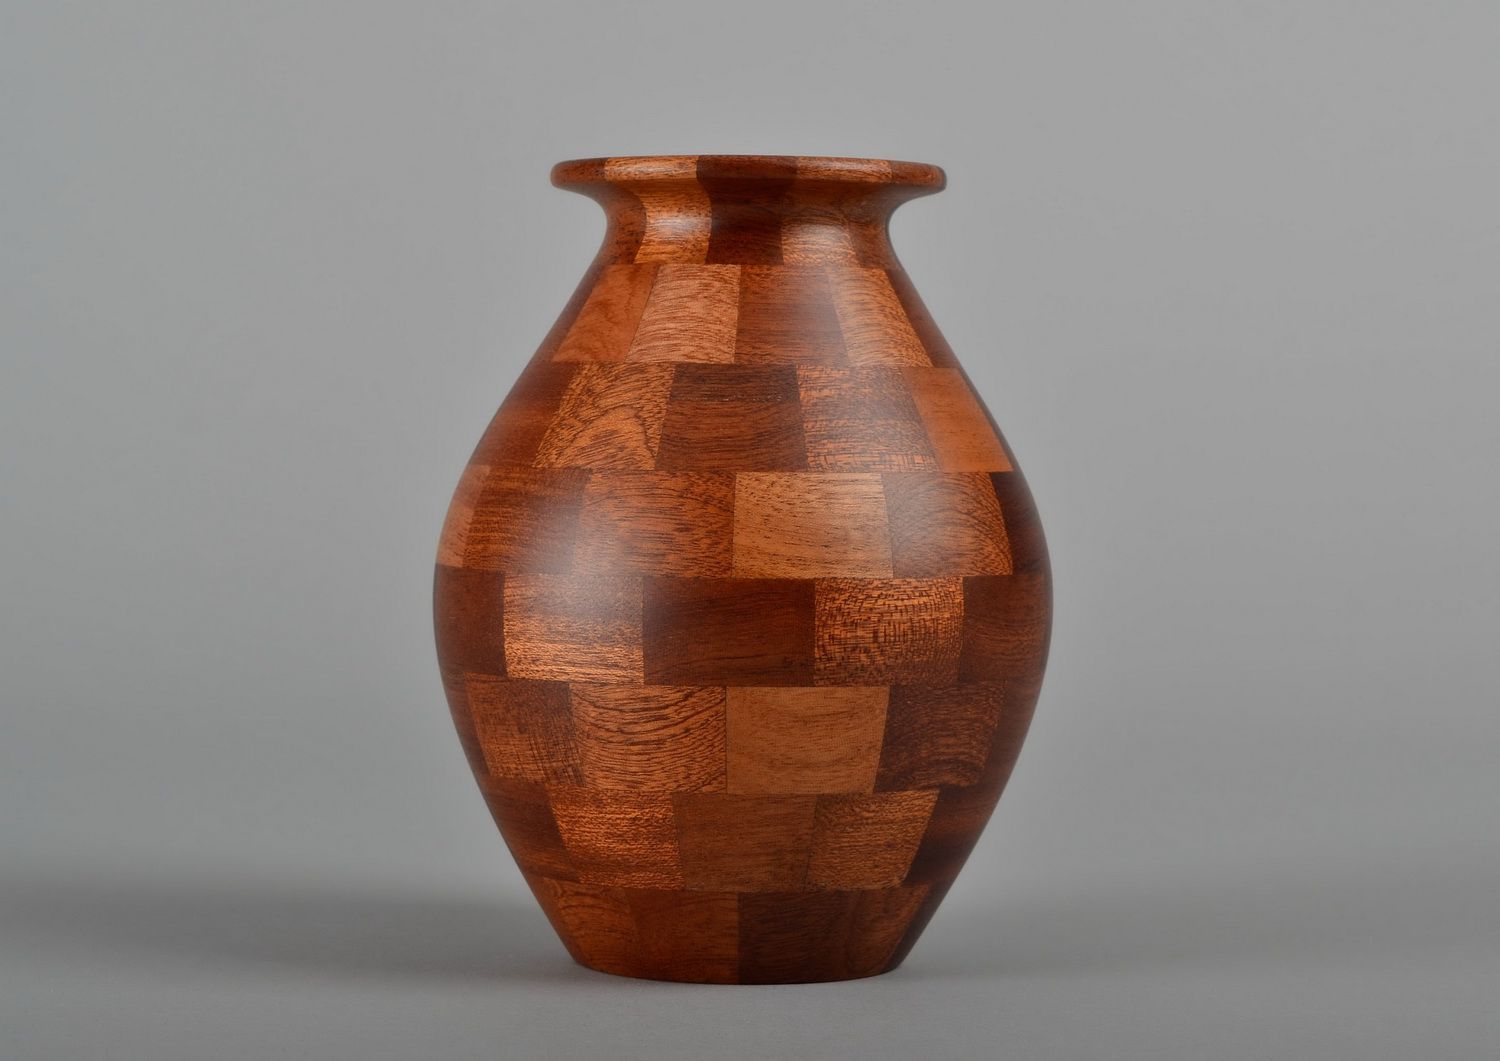 Handmade wooden 6 inches vase made in segmentation technique 0,52 lb photo 2